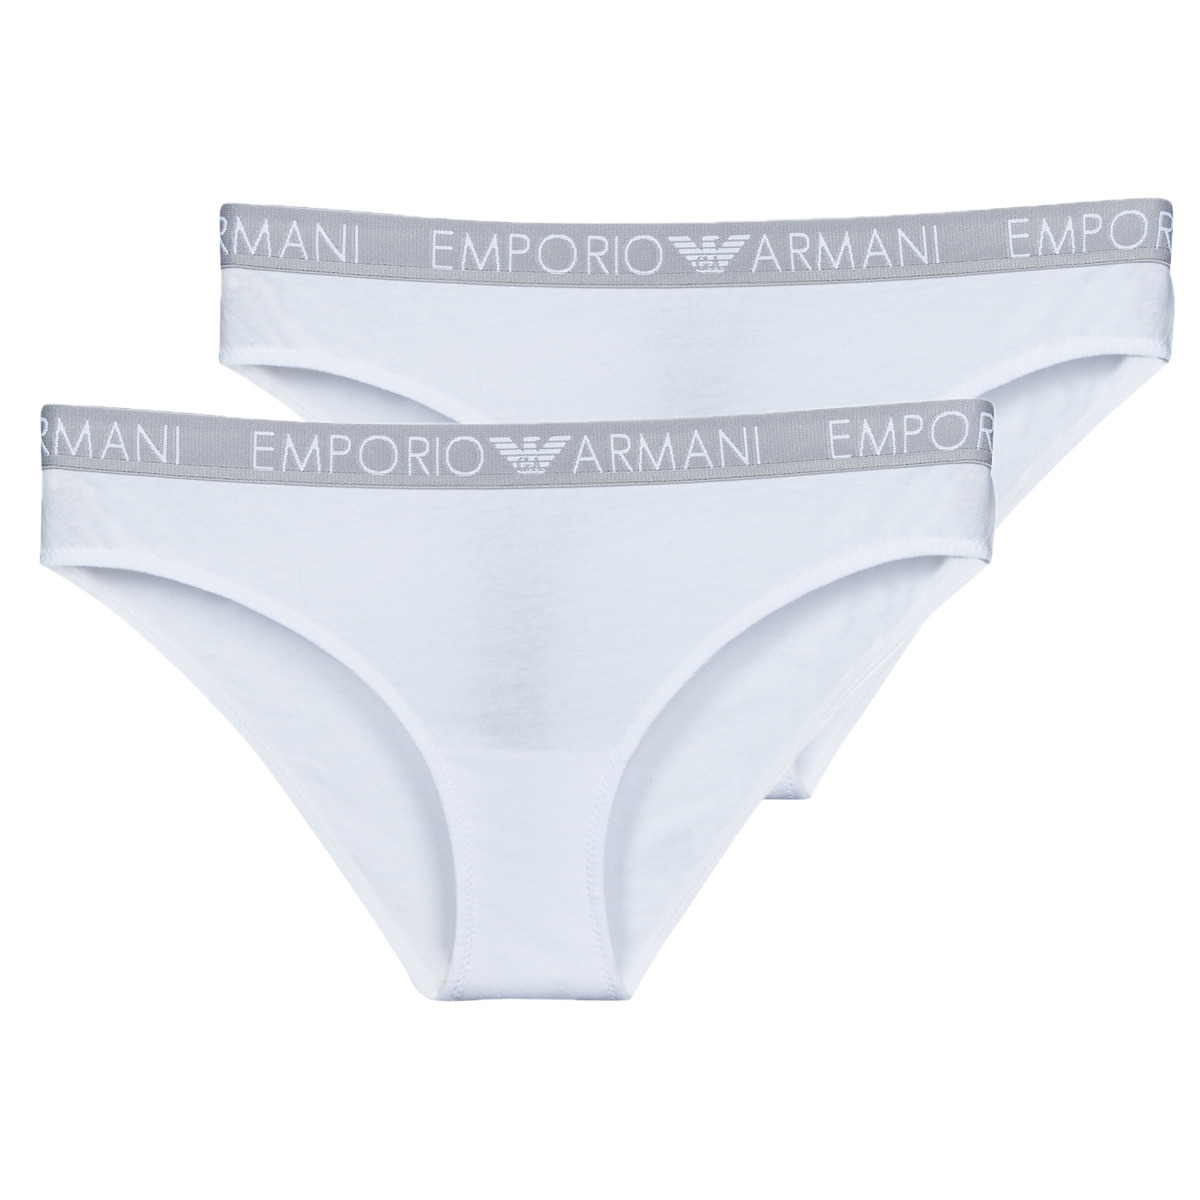 Emporio Armani Blanc BI-PACK BRAZILIAN BRIEF PACK X2 xqxALoyW